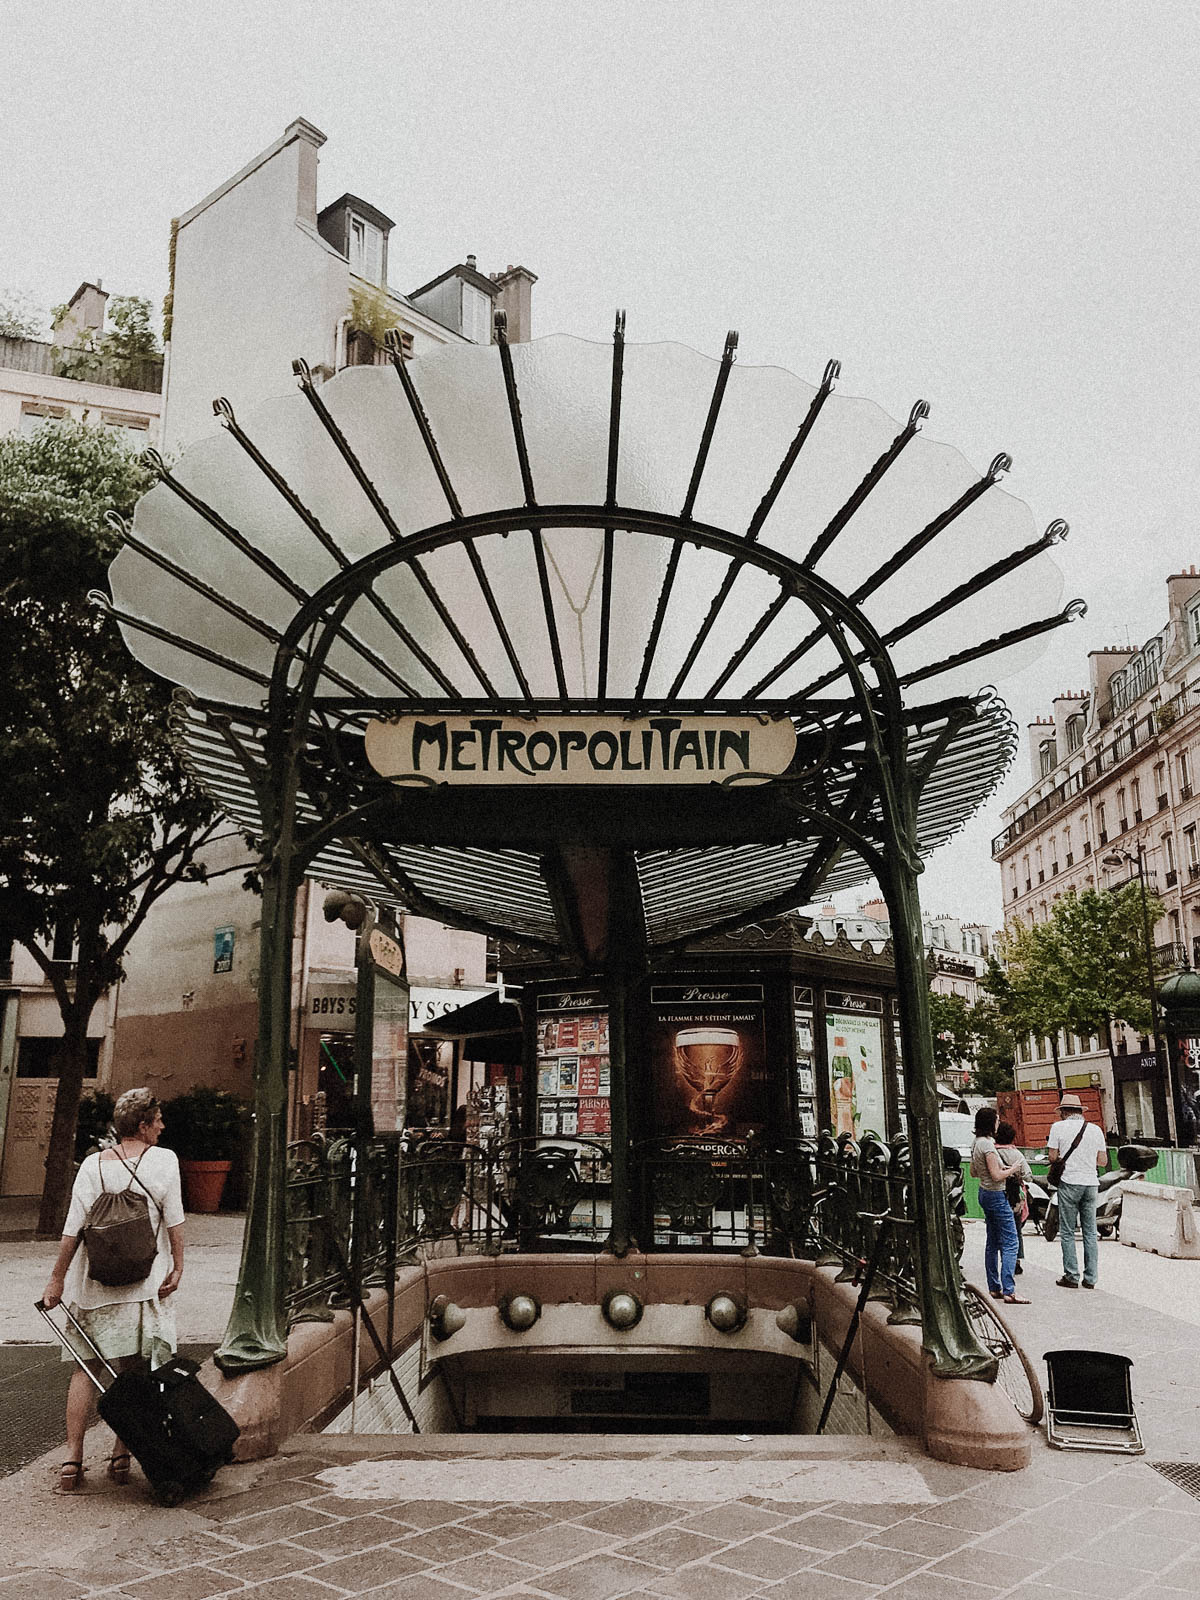 Paris France Travel Guide - Art Nouveau Metro Entry, European Architecture and Buildings / RG Daily Blog